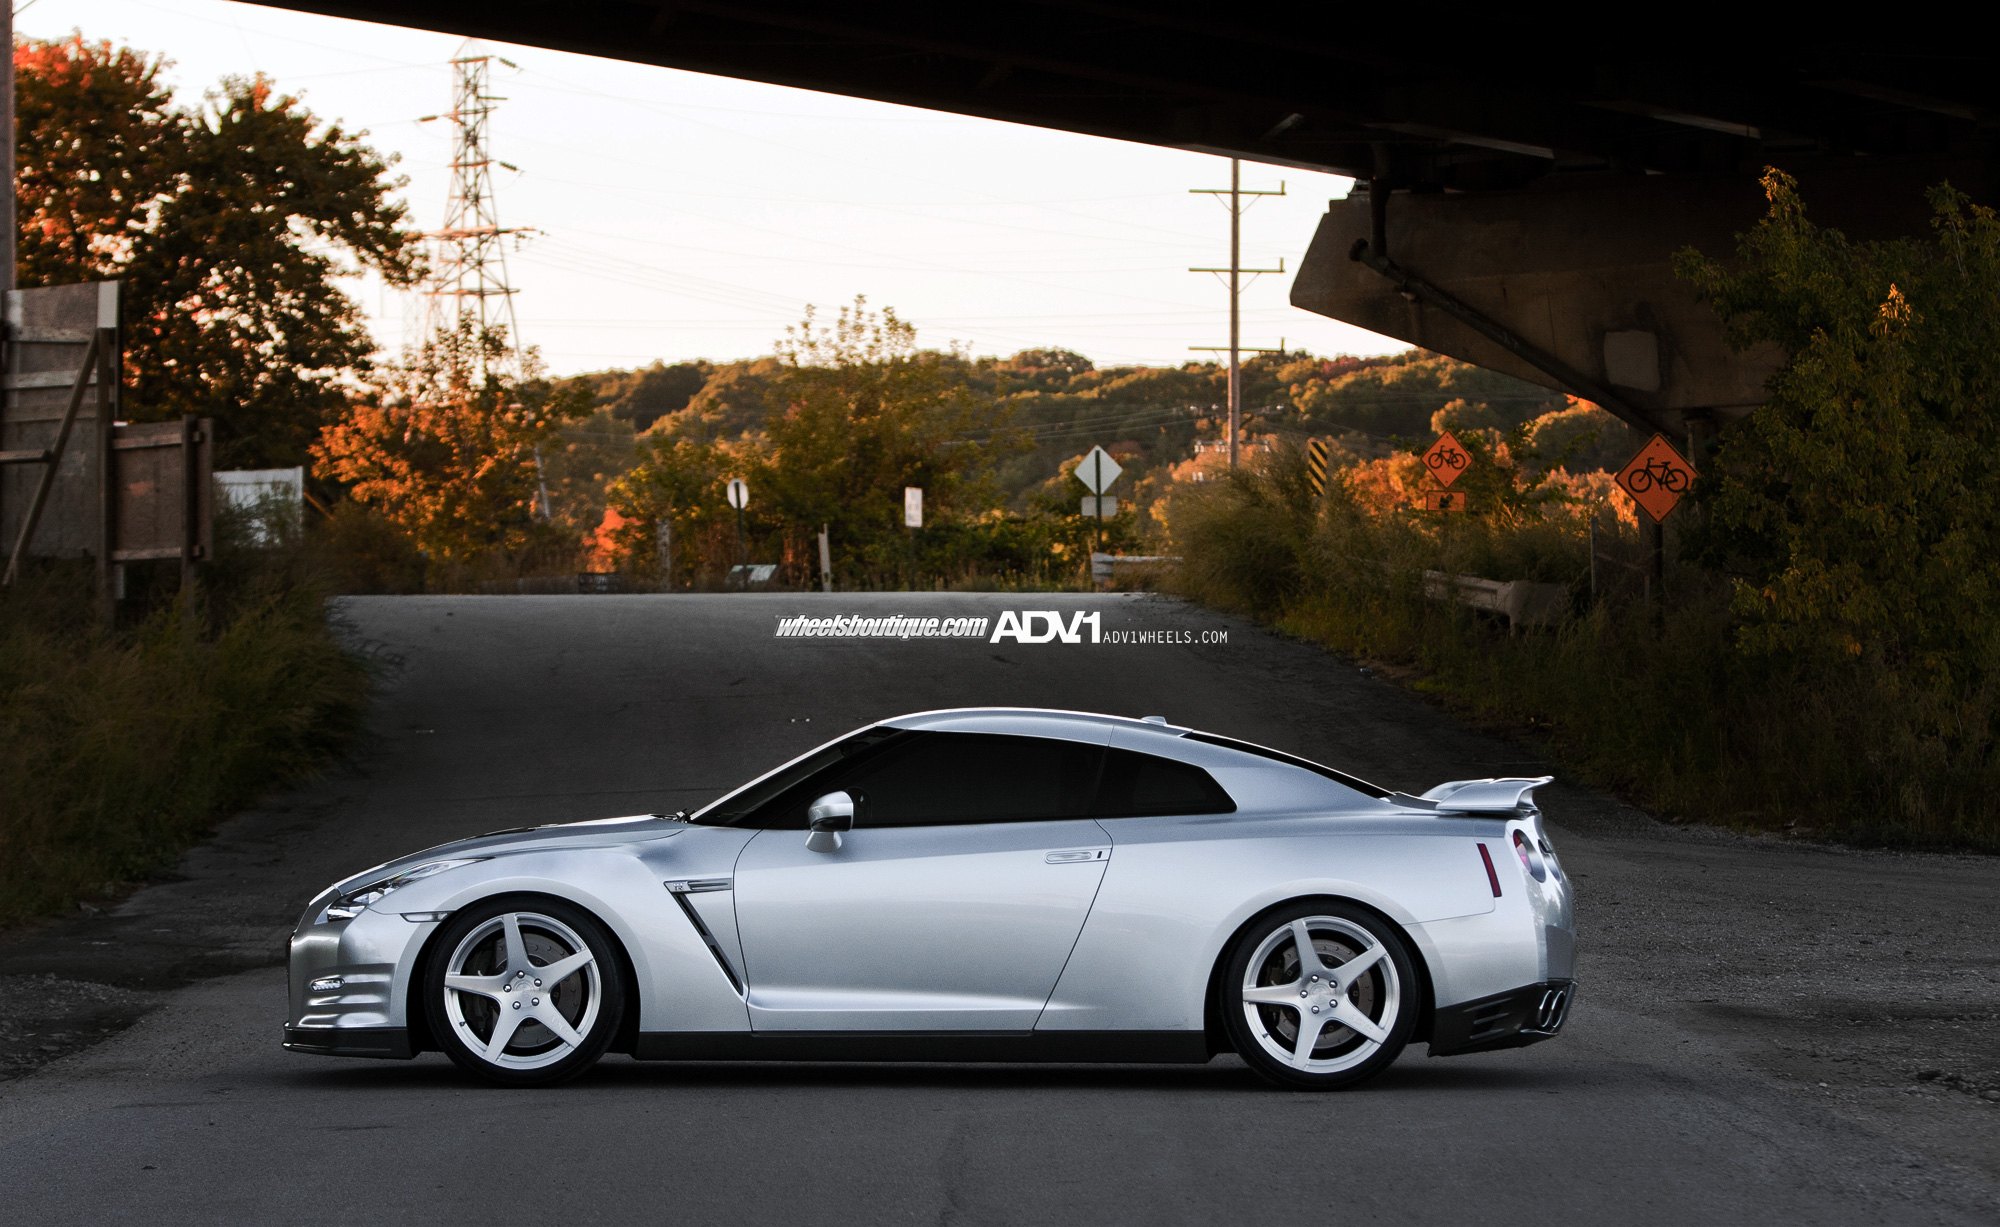 Silver Nissan GT-R with Custom Polished ADV1 Rims - Photo by ADV.1